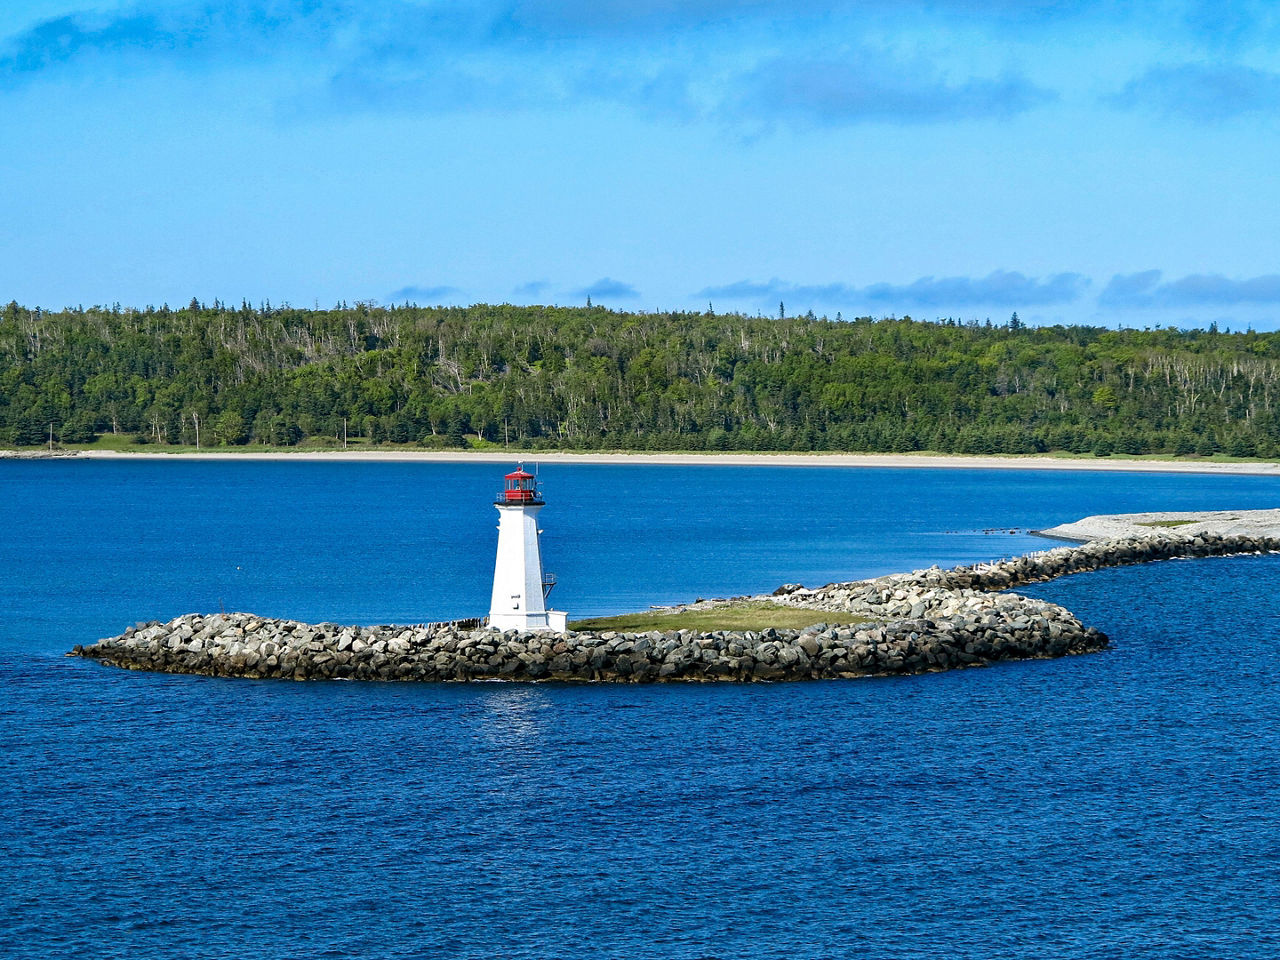 The Mcnabs Island Lighthouse in Halifax, Nova Scotia